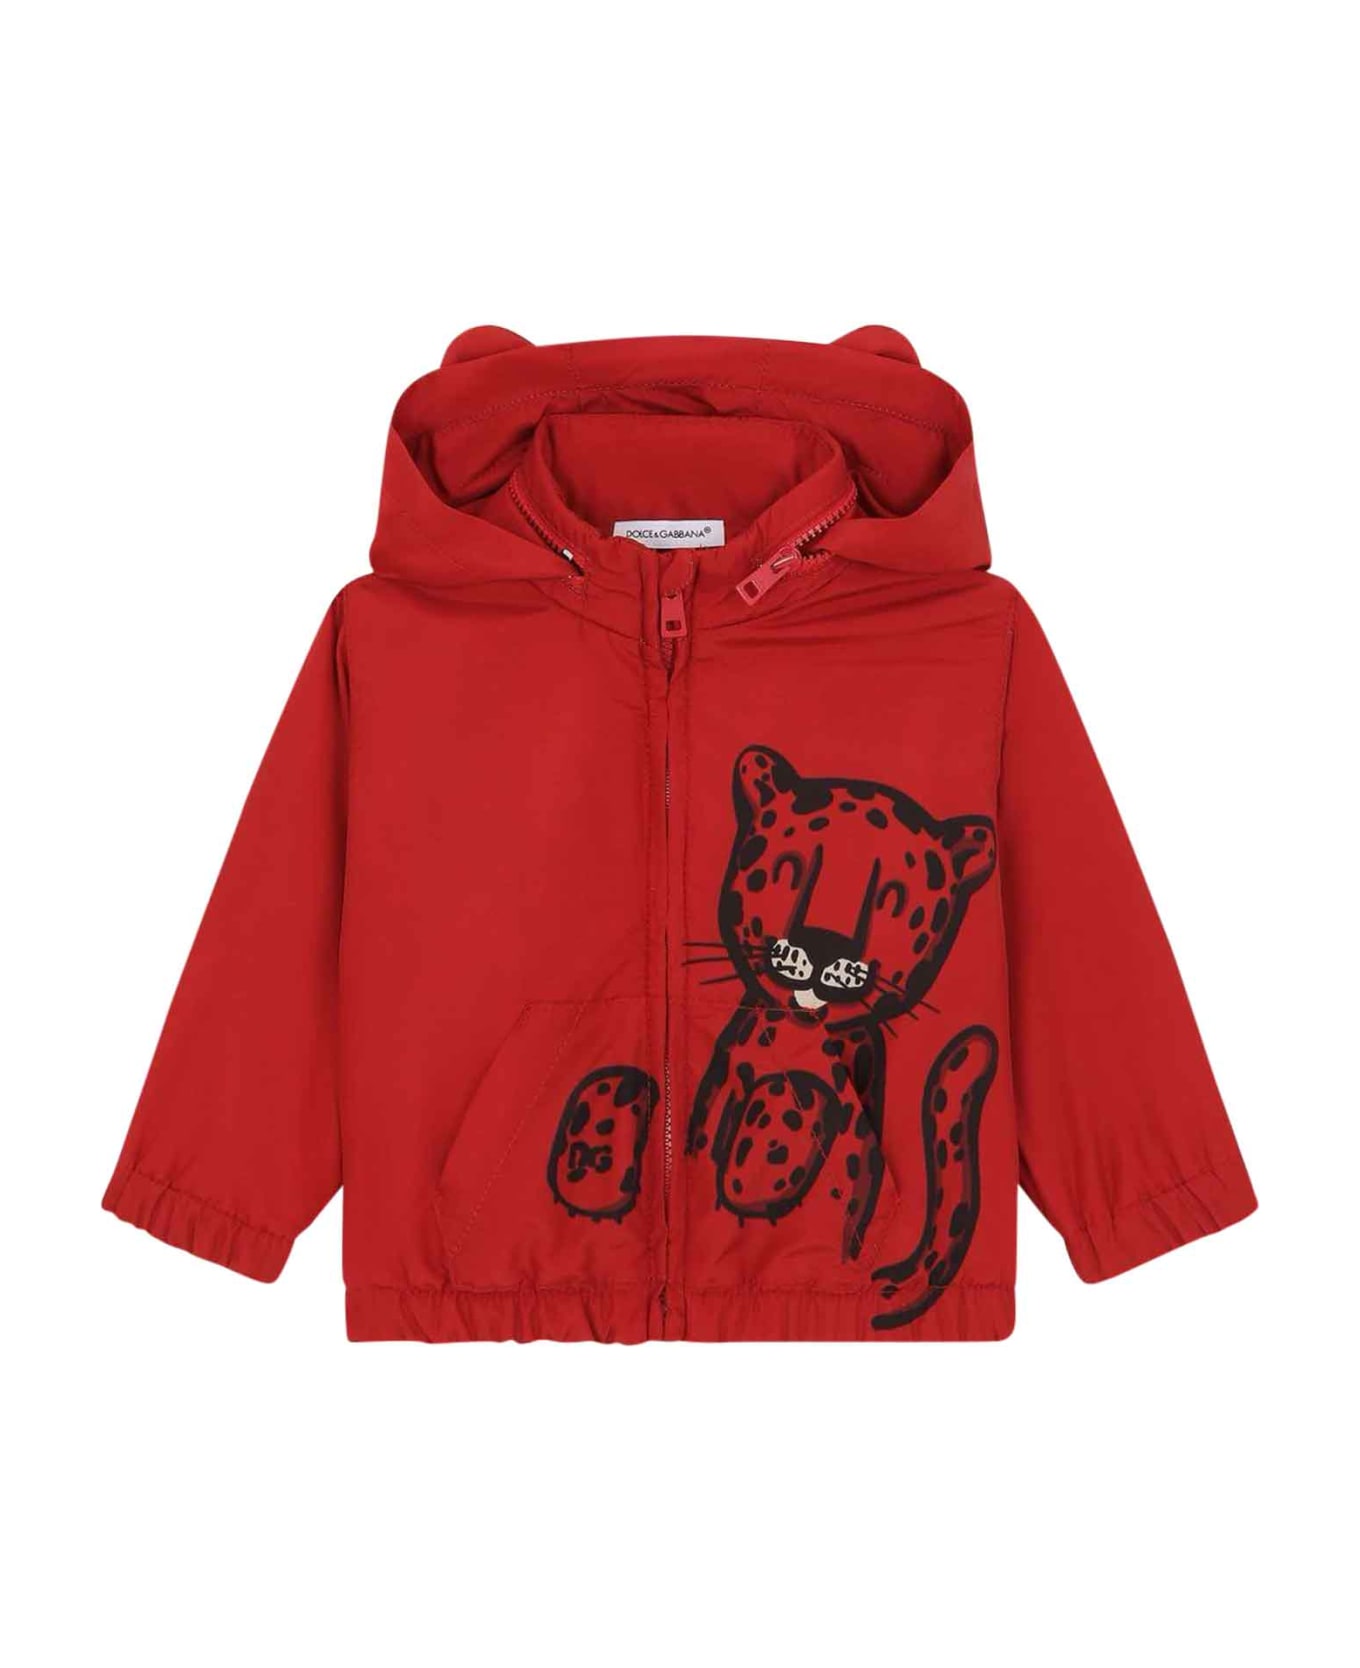 Dolce & Gabbana Red Newborn Sweatshirt - Leopardato